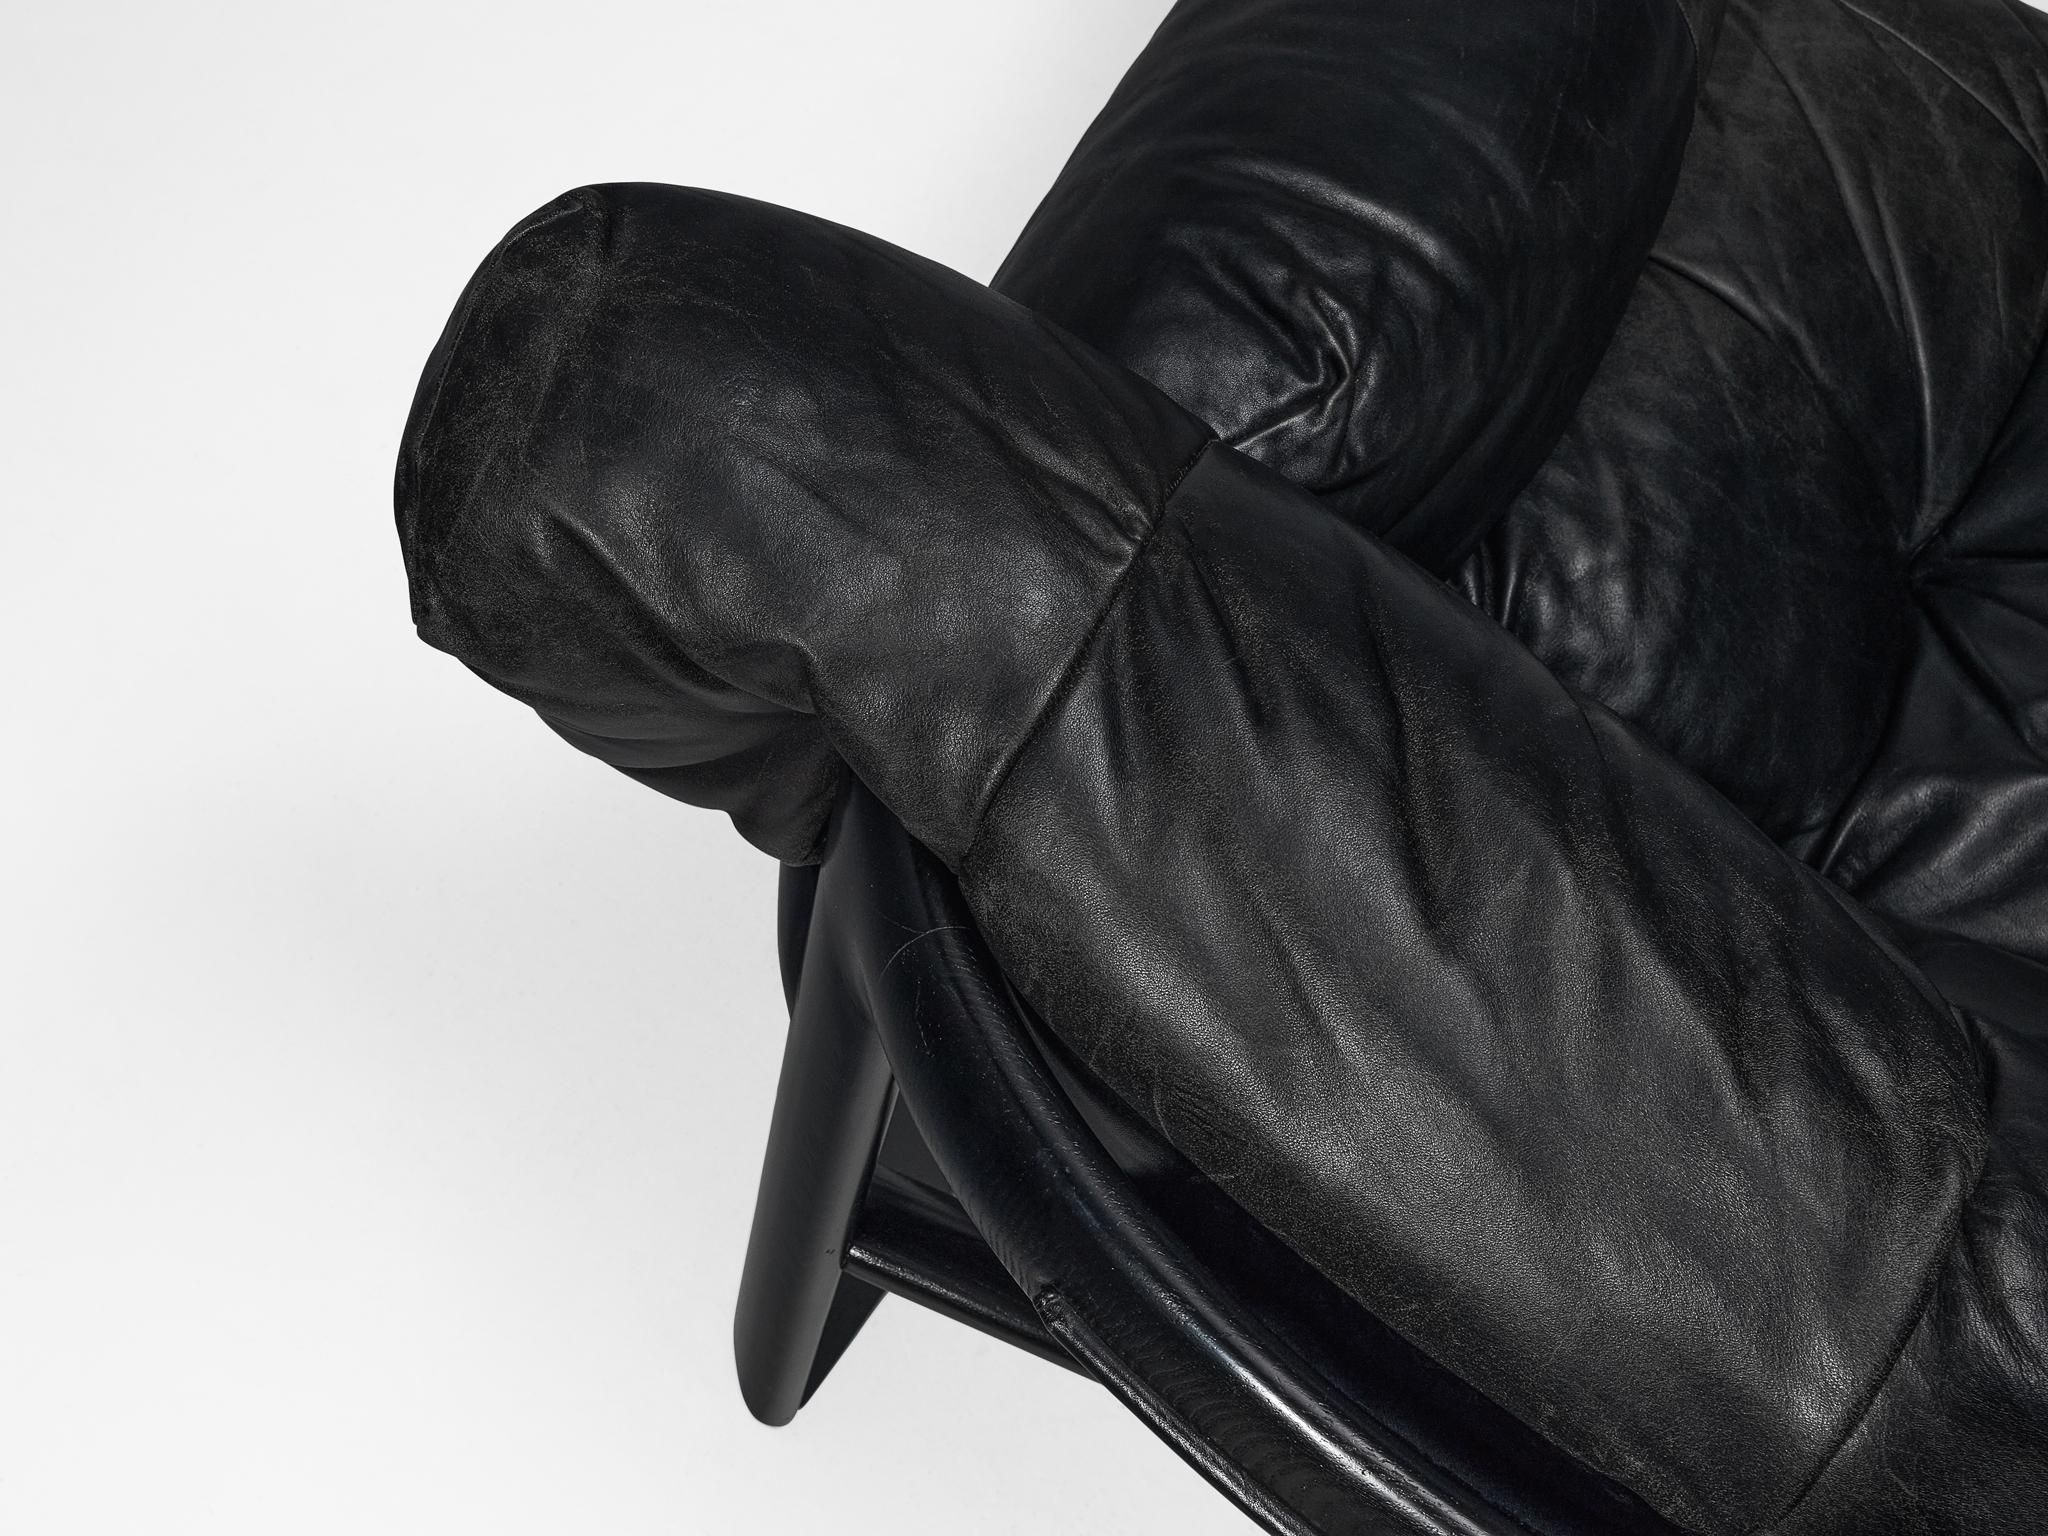 Angelo Mangiarotti & Chiara Pampo 'Légère' Sofa in Black Leather For Sale 2